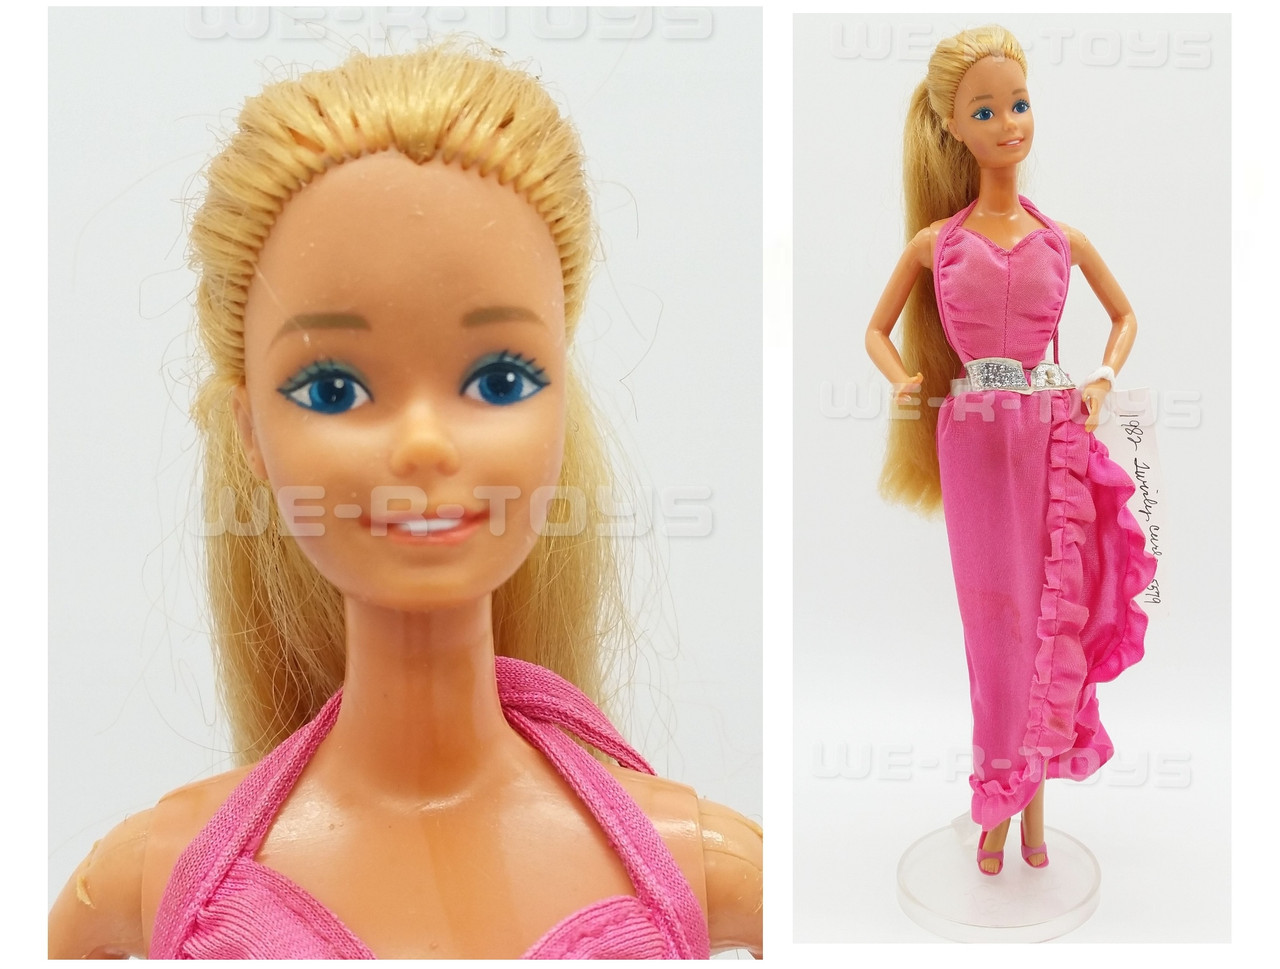 Barbie Designer Collection 1982.